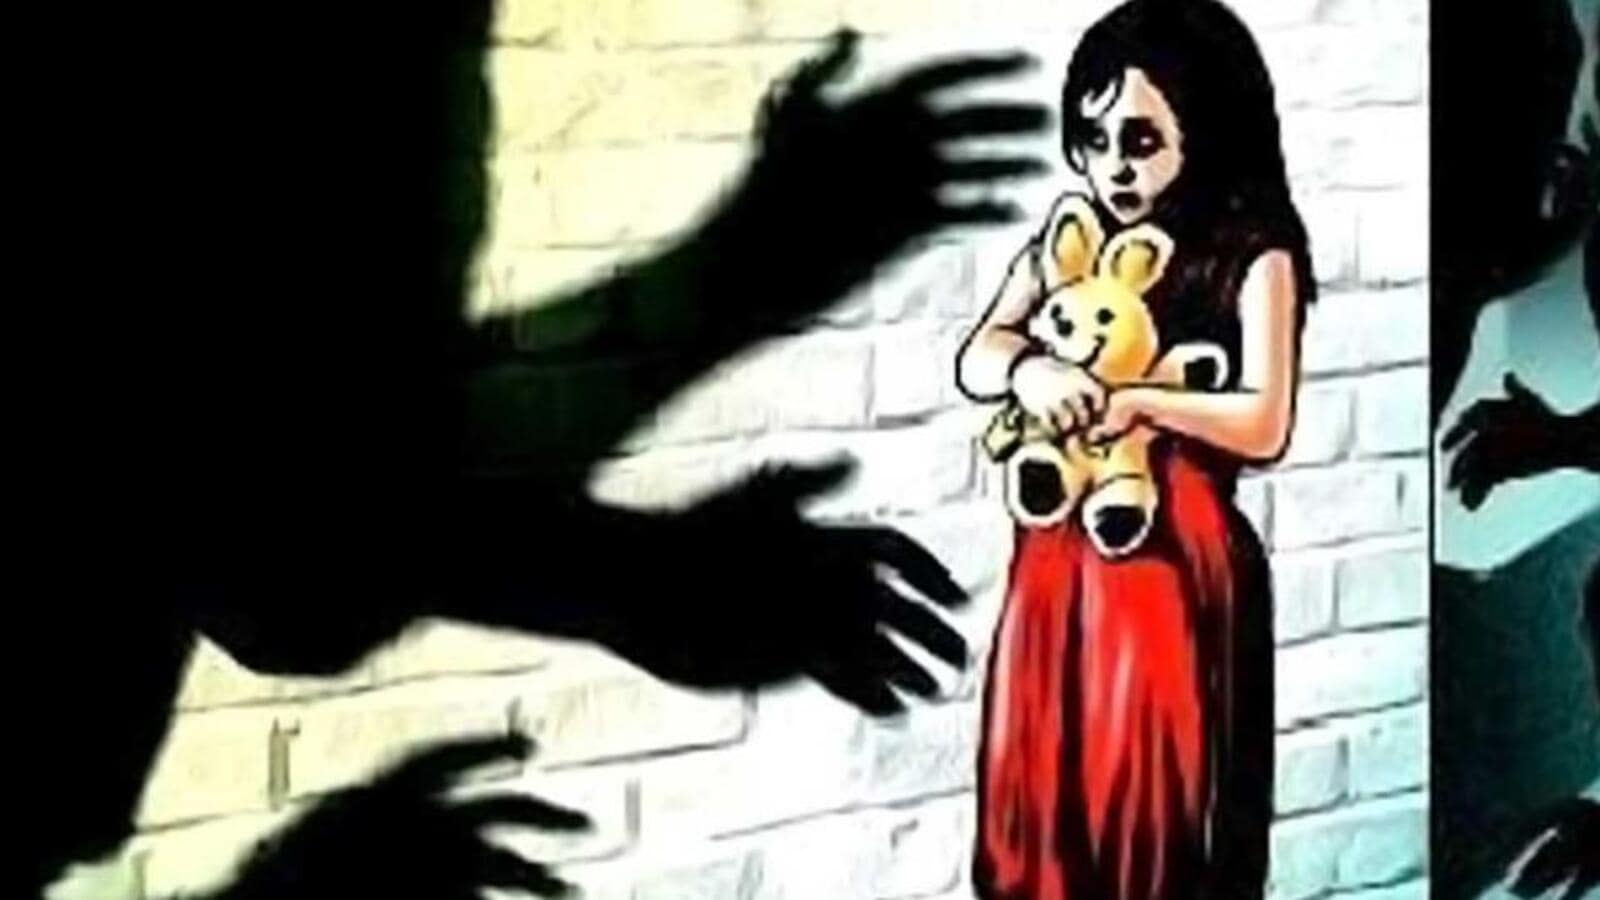 School Girl Ki Gangrep Sexy Videos - 8 men rape, film and blackmail 17-year-old Rajasthan girl. Then release  video - Hindustan Times